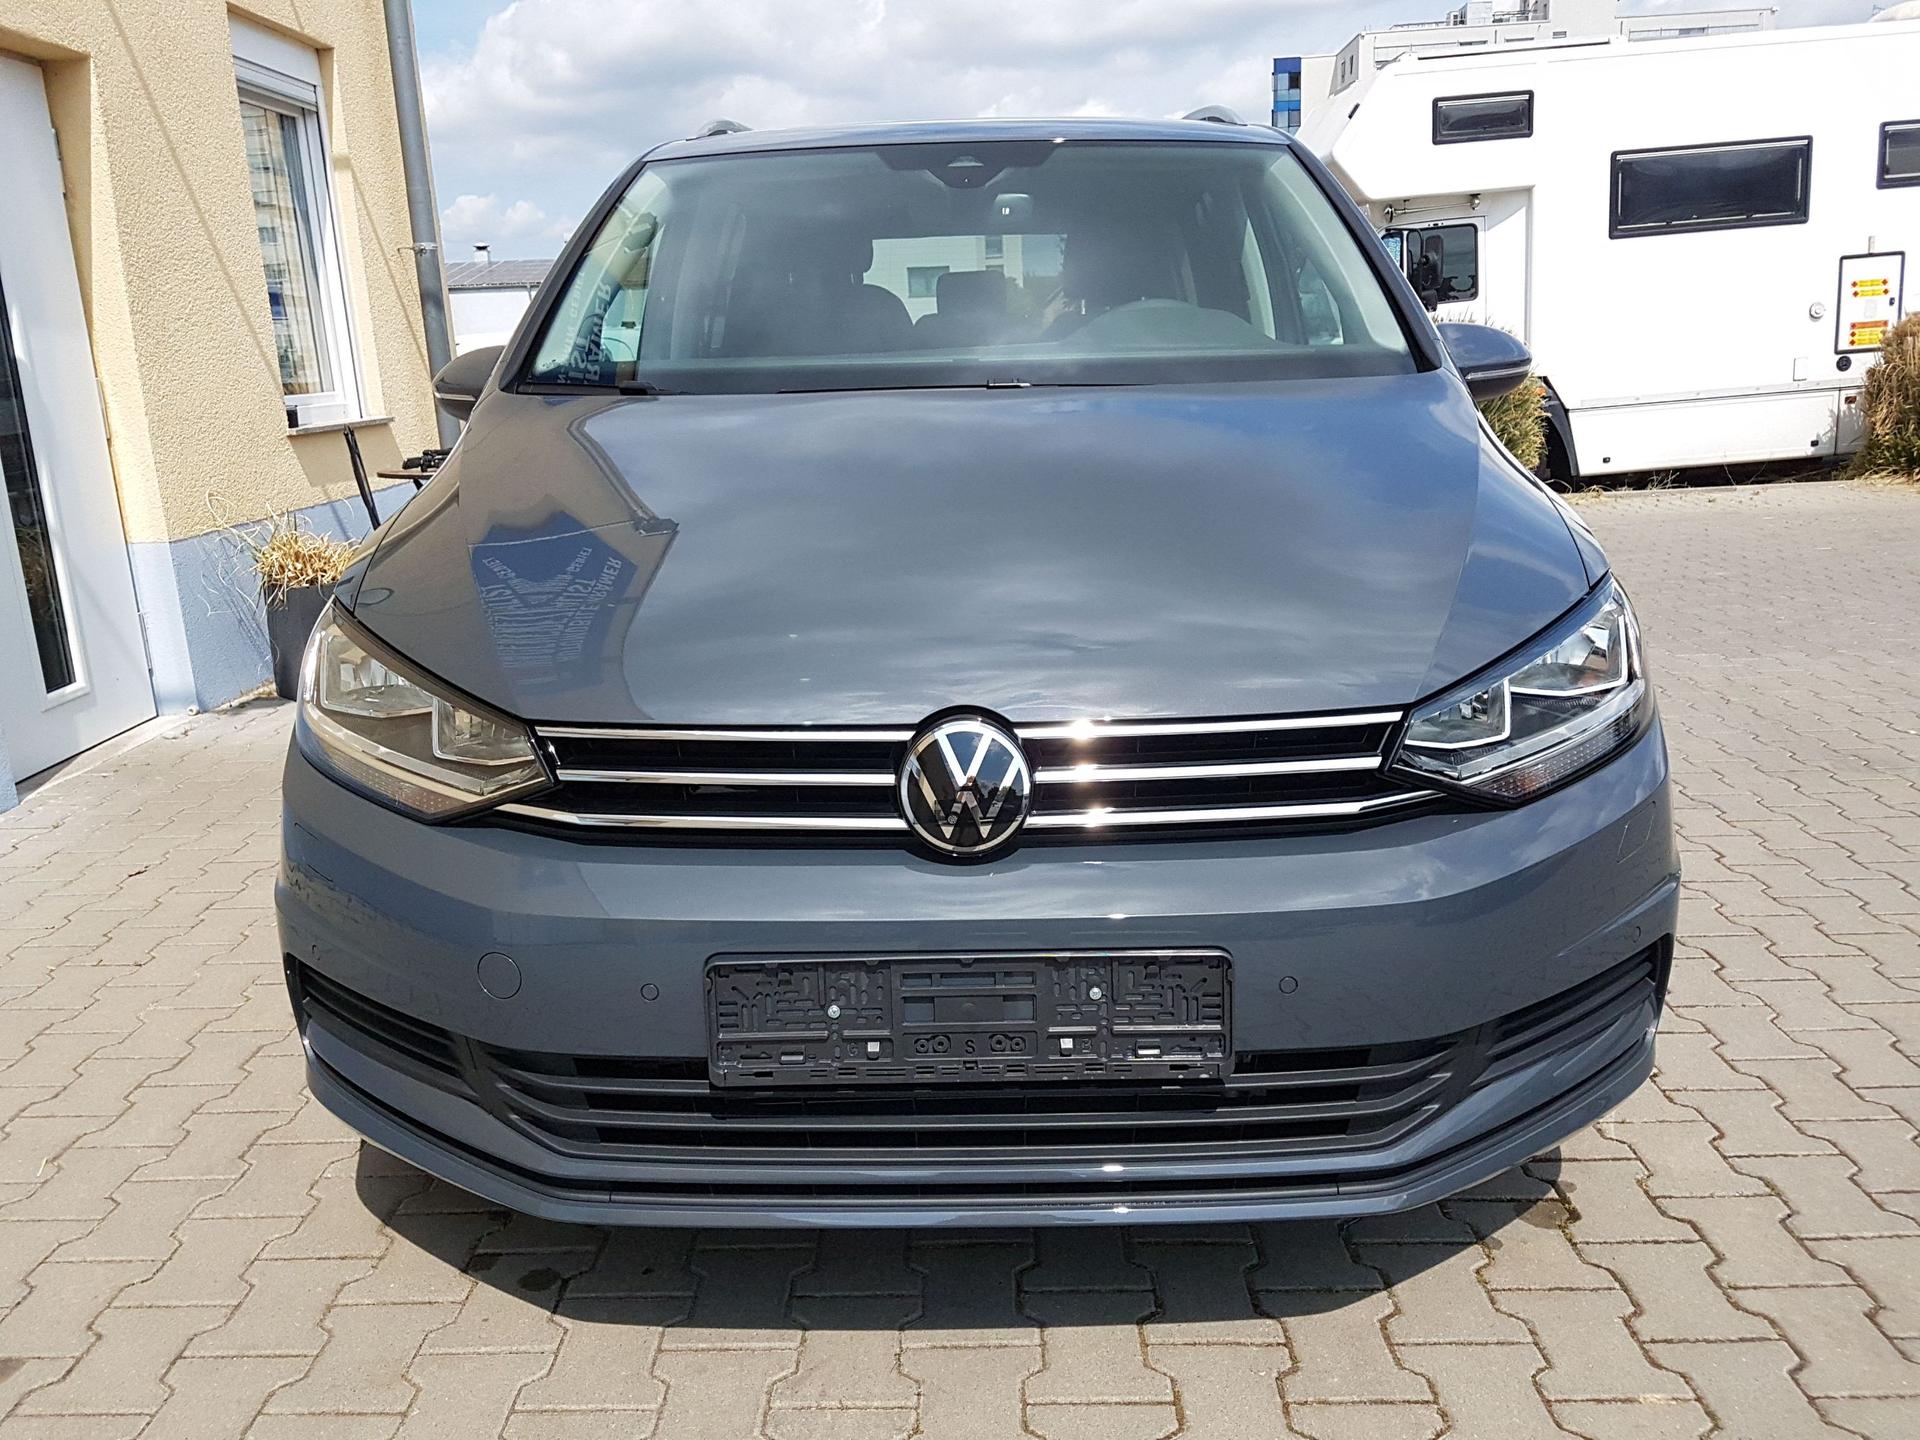 Volkswagen Touran EU-Neuwagen Reimport